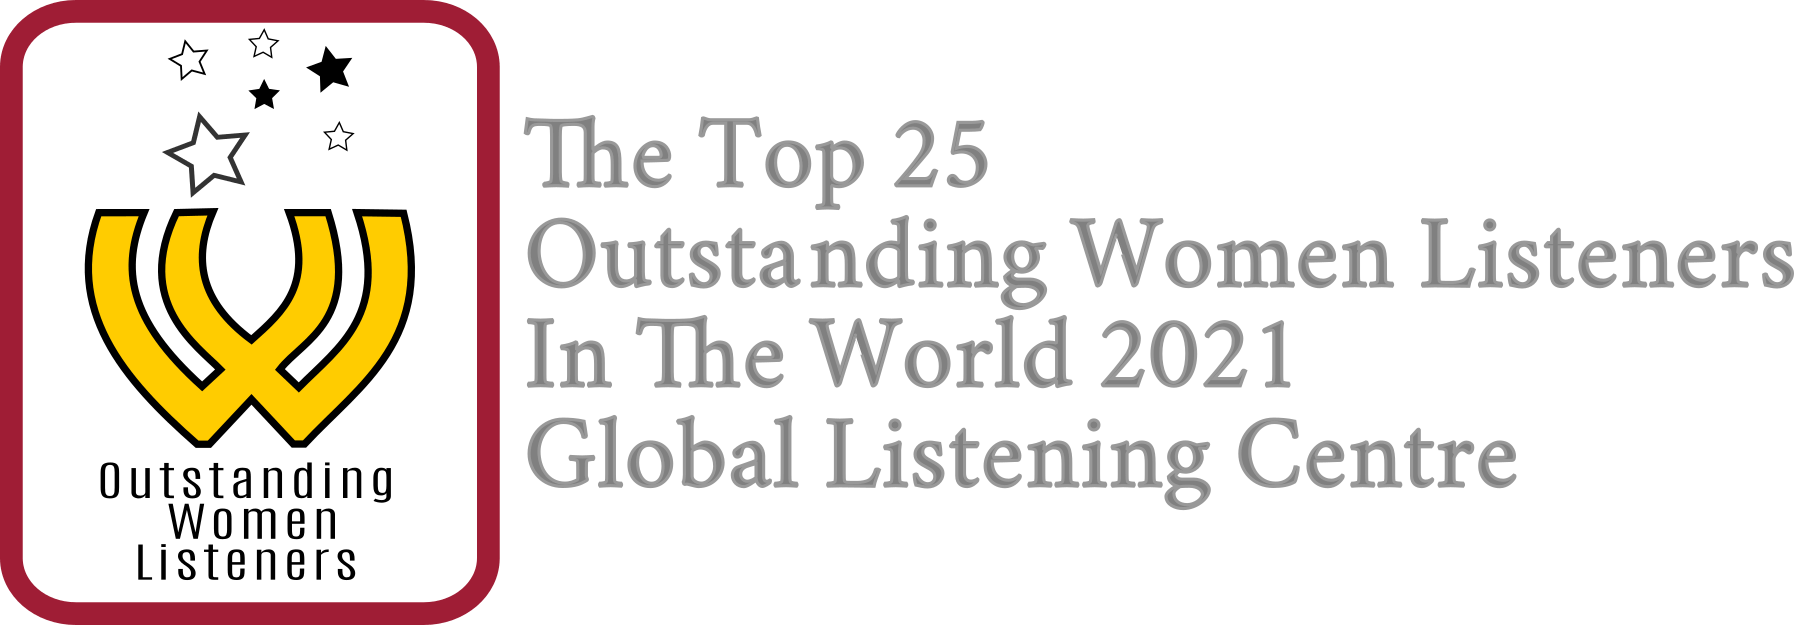 Global Listening Centre Listening Transforms Lives 3118